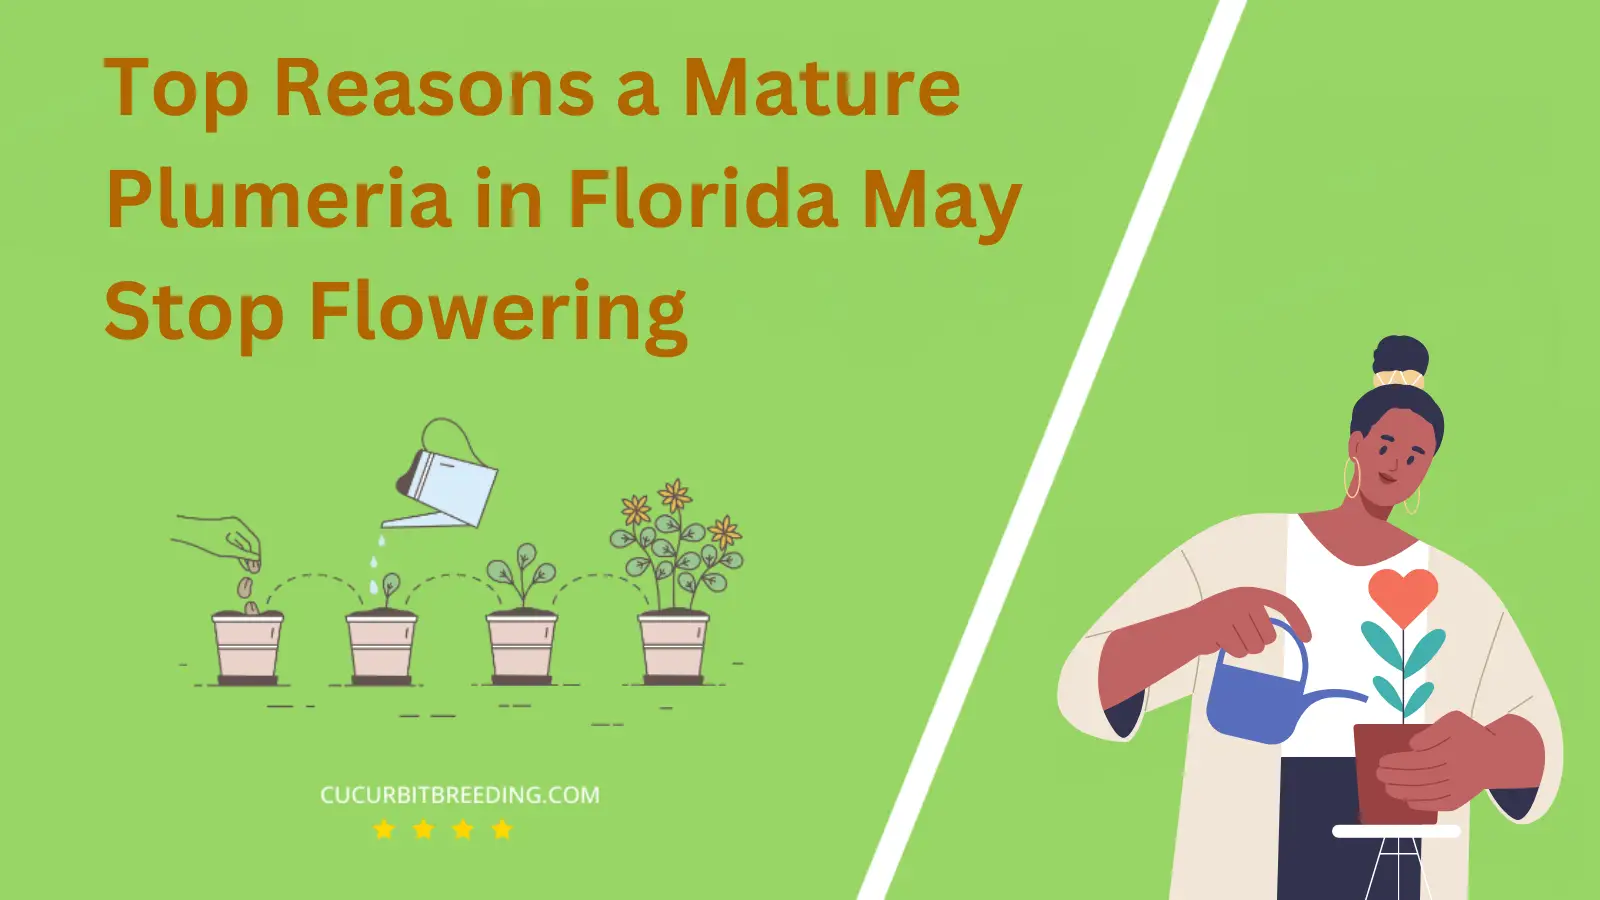 Top Reasons a Mature Plumeria in Florida May Stop Flowering